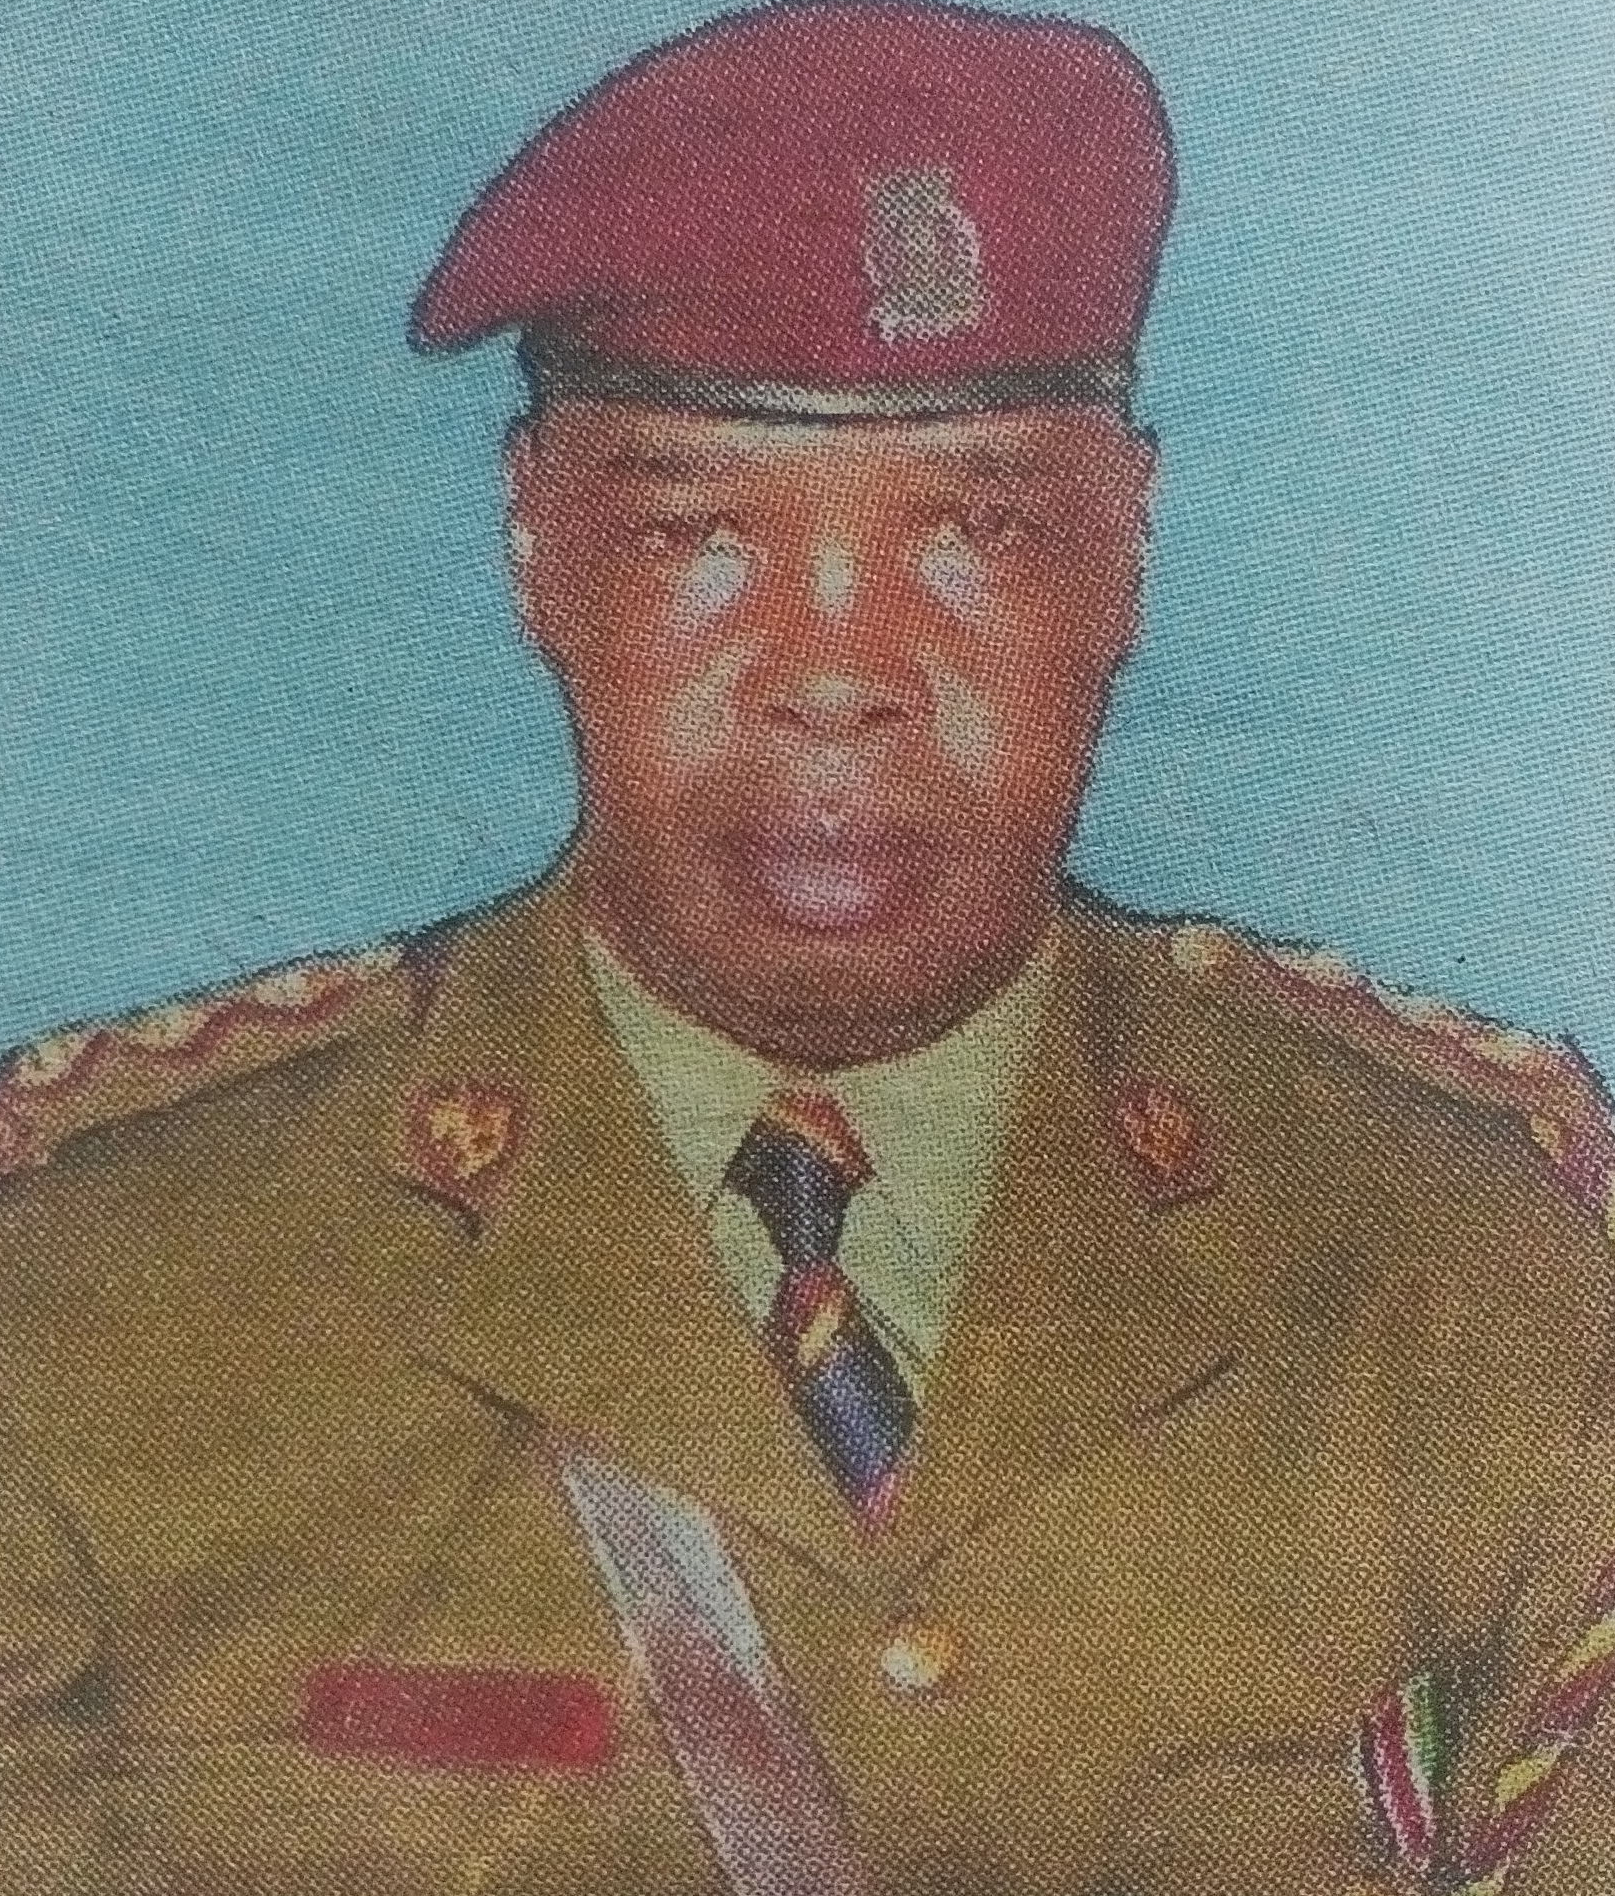 Obituary Image of Chief Inspector Noah Evans Mutai